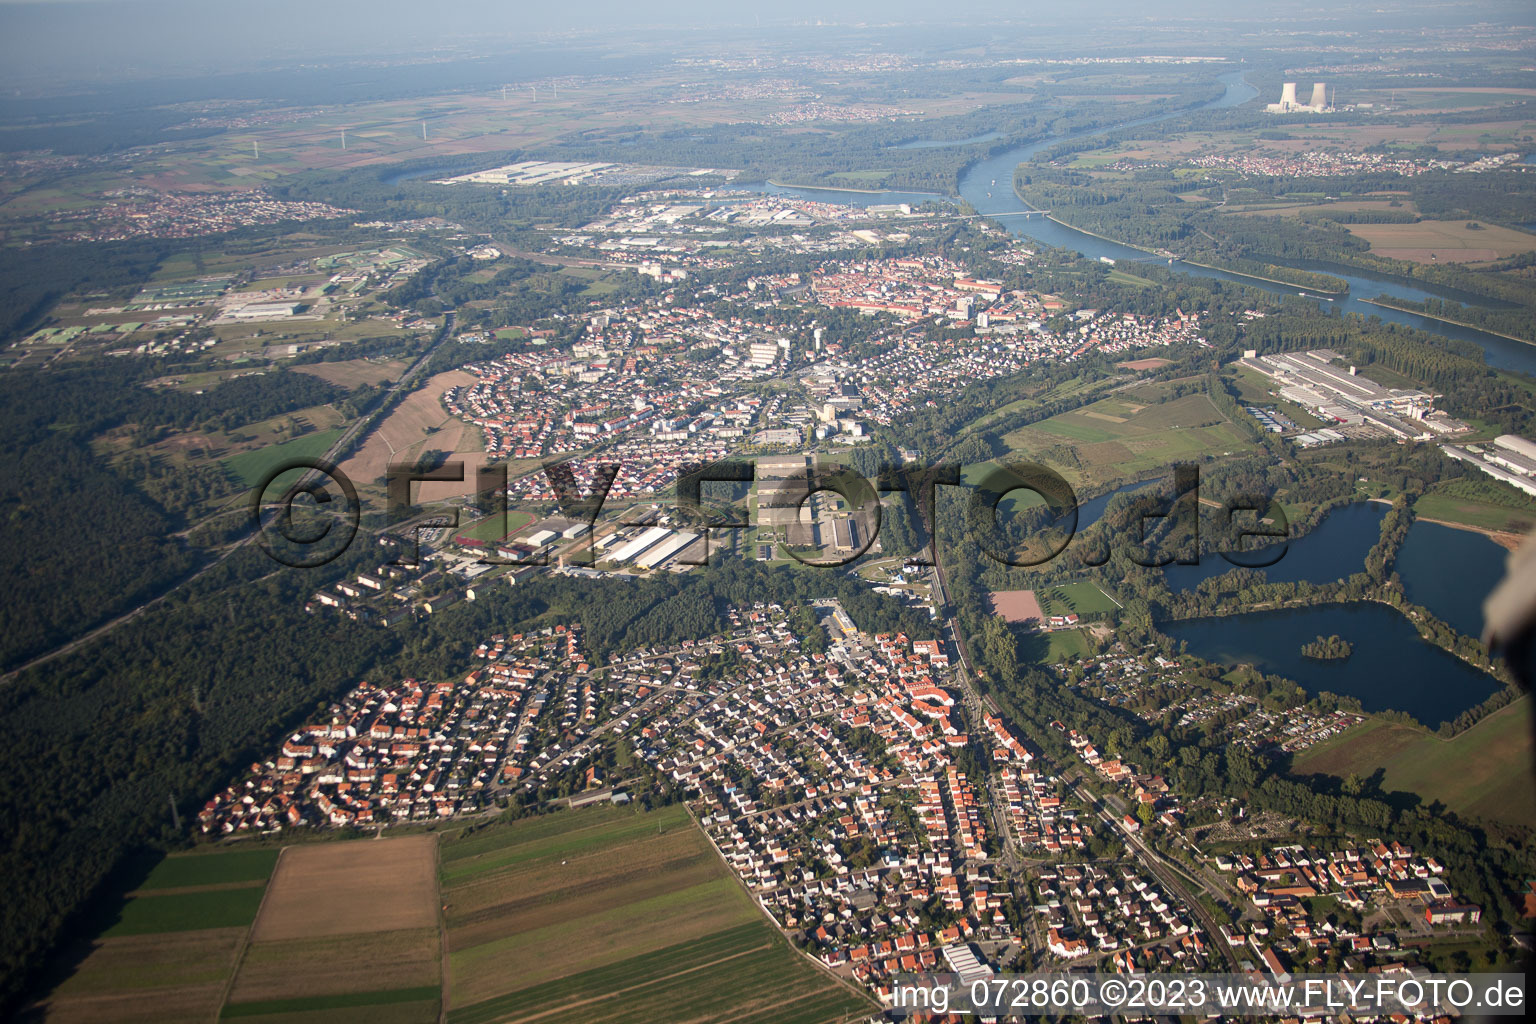 Aerial view of District Sondernheim in Germersheim in the state Rhineland-Palatinate, Germany